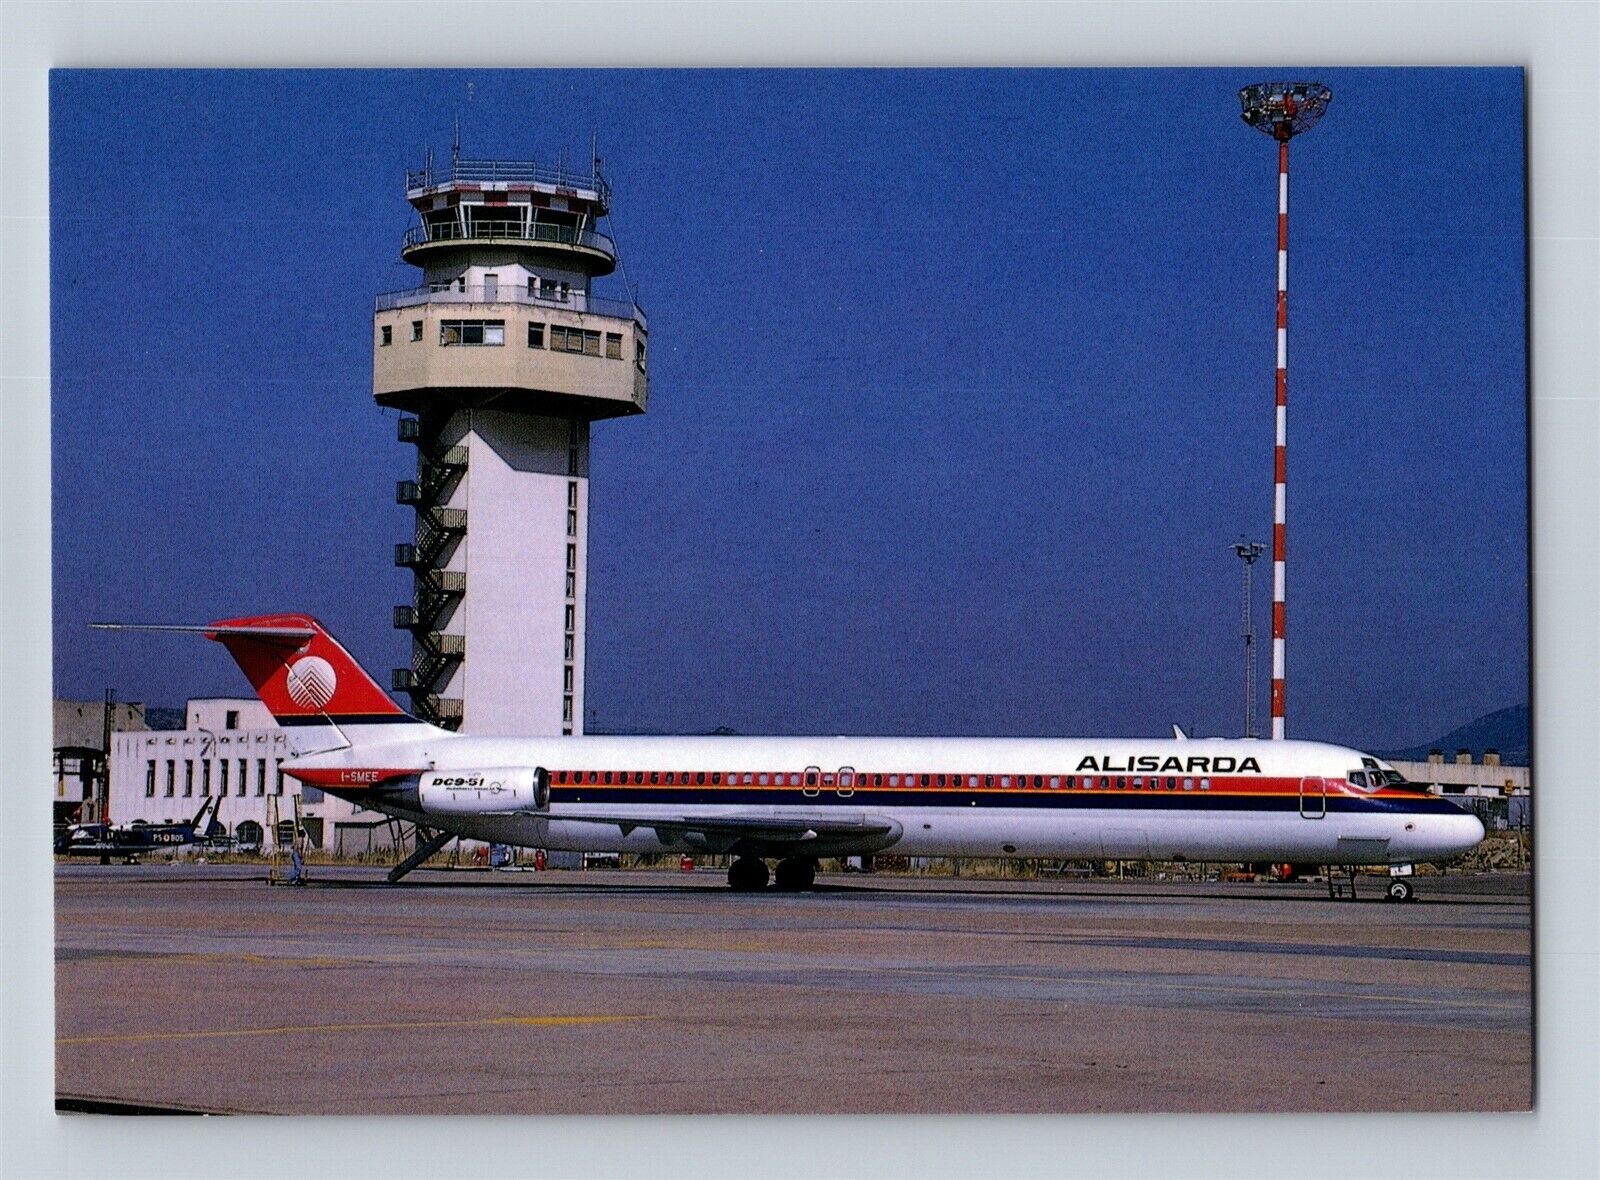 Aviation Airplane Postcard Alisarda Airlines Olbia Sardinia DC-9-51 Tower H15